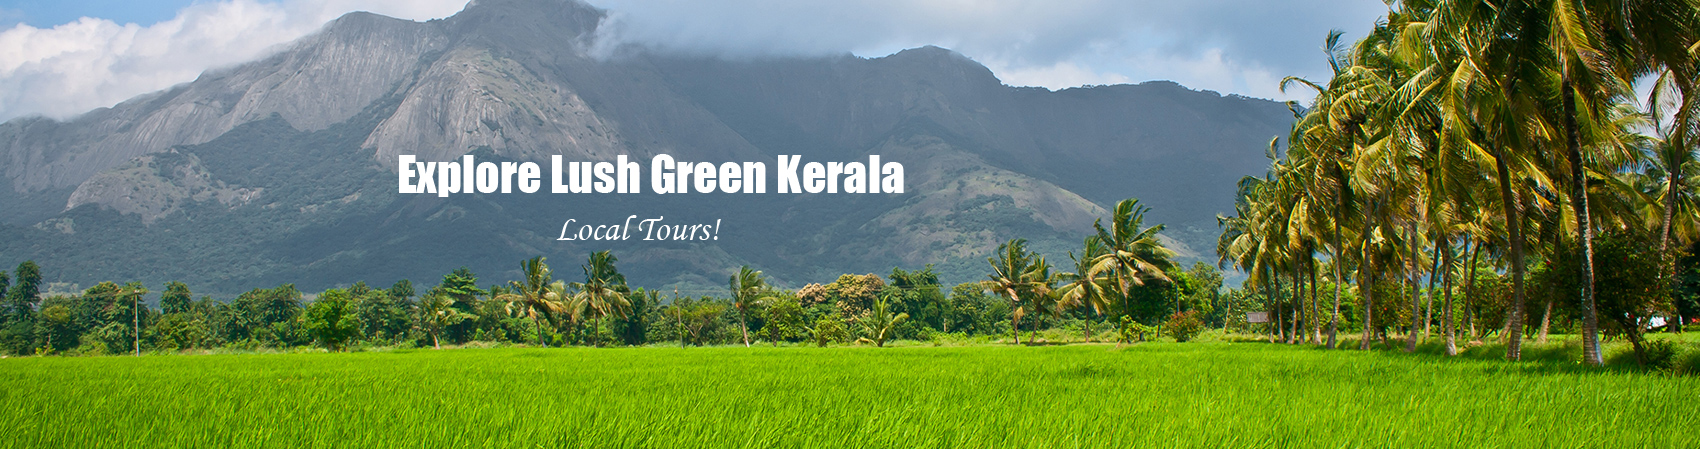 Explore Lush Green Kerala